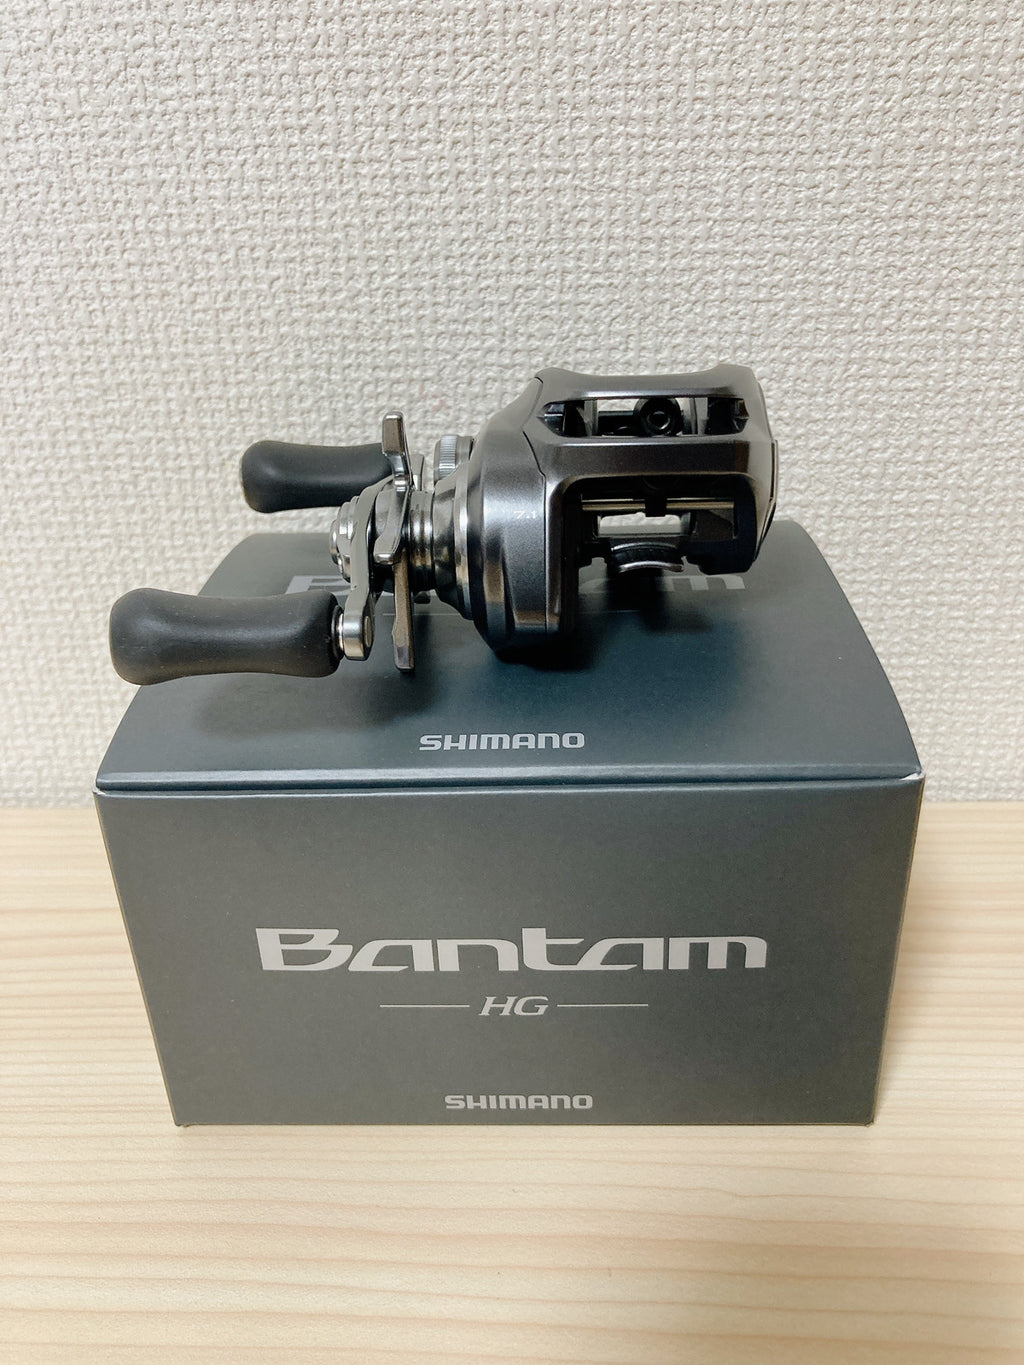 Shimano Baitcasting Reel 22 Bantam HG RIGHT Gear Ratio 7.1:1 Fishing R